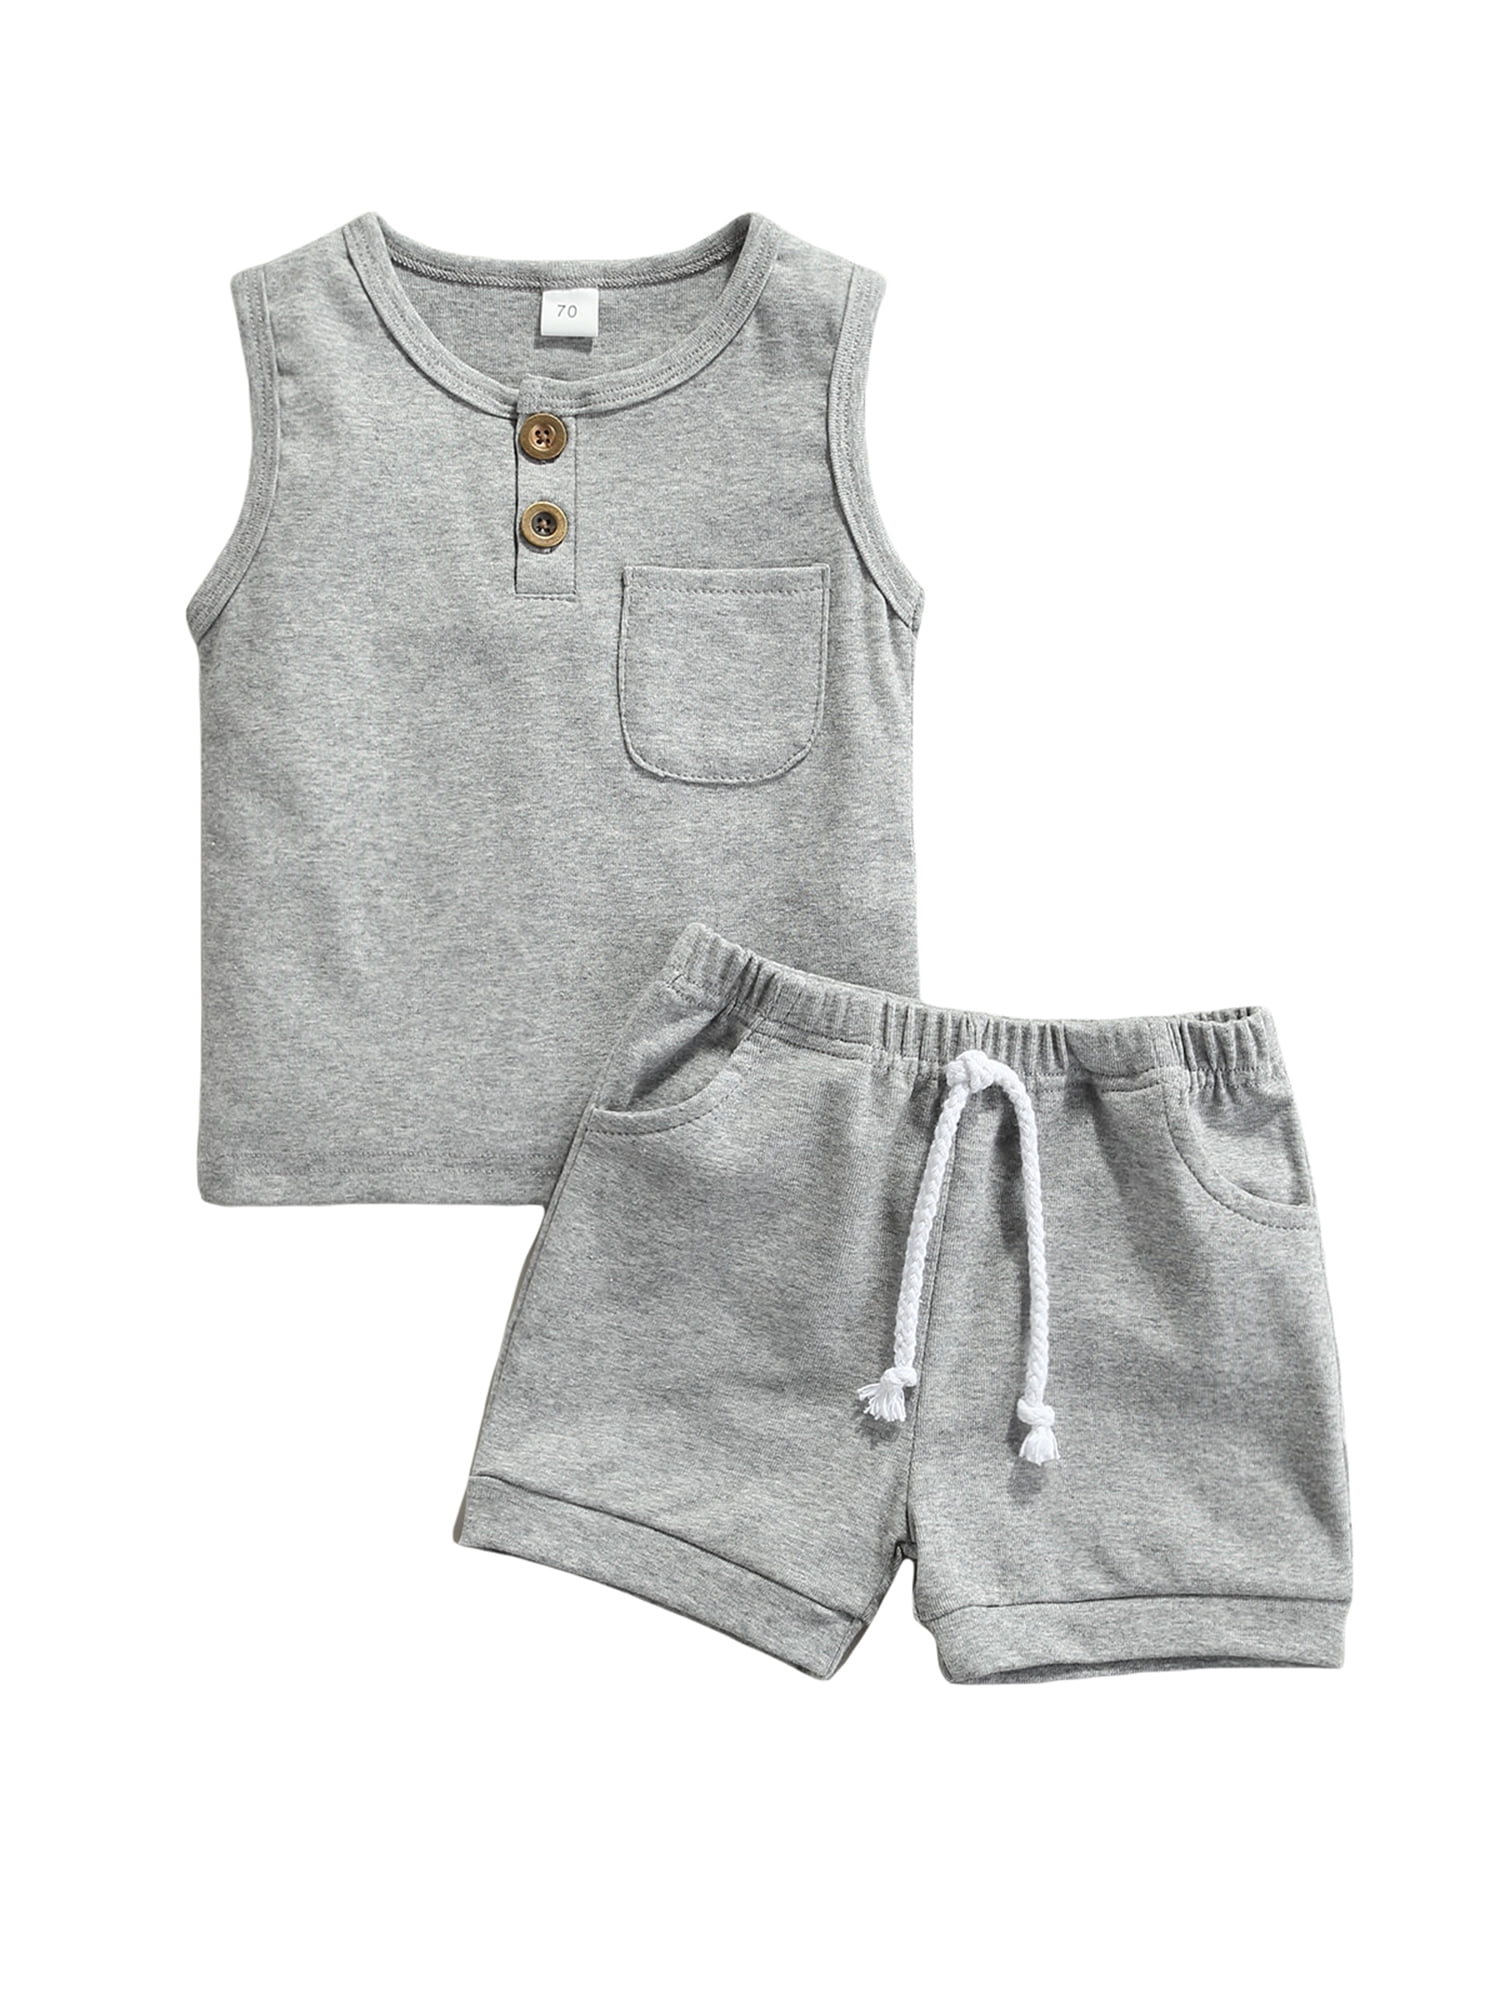 Toddler Baby Girl Boy Summer Knitted Outfit Ribbed Sleeveless Button Tank Top Drawstring Shorts 2Pcs Ribbed Clothes Set